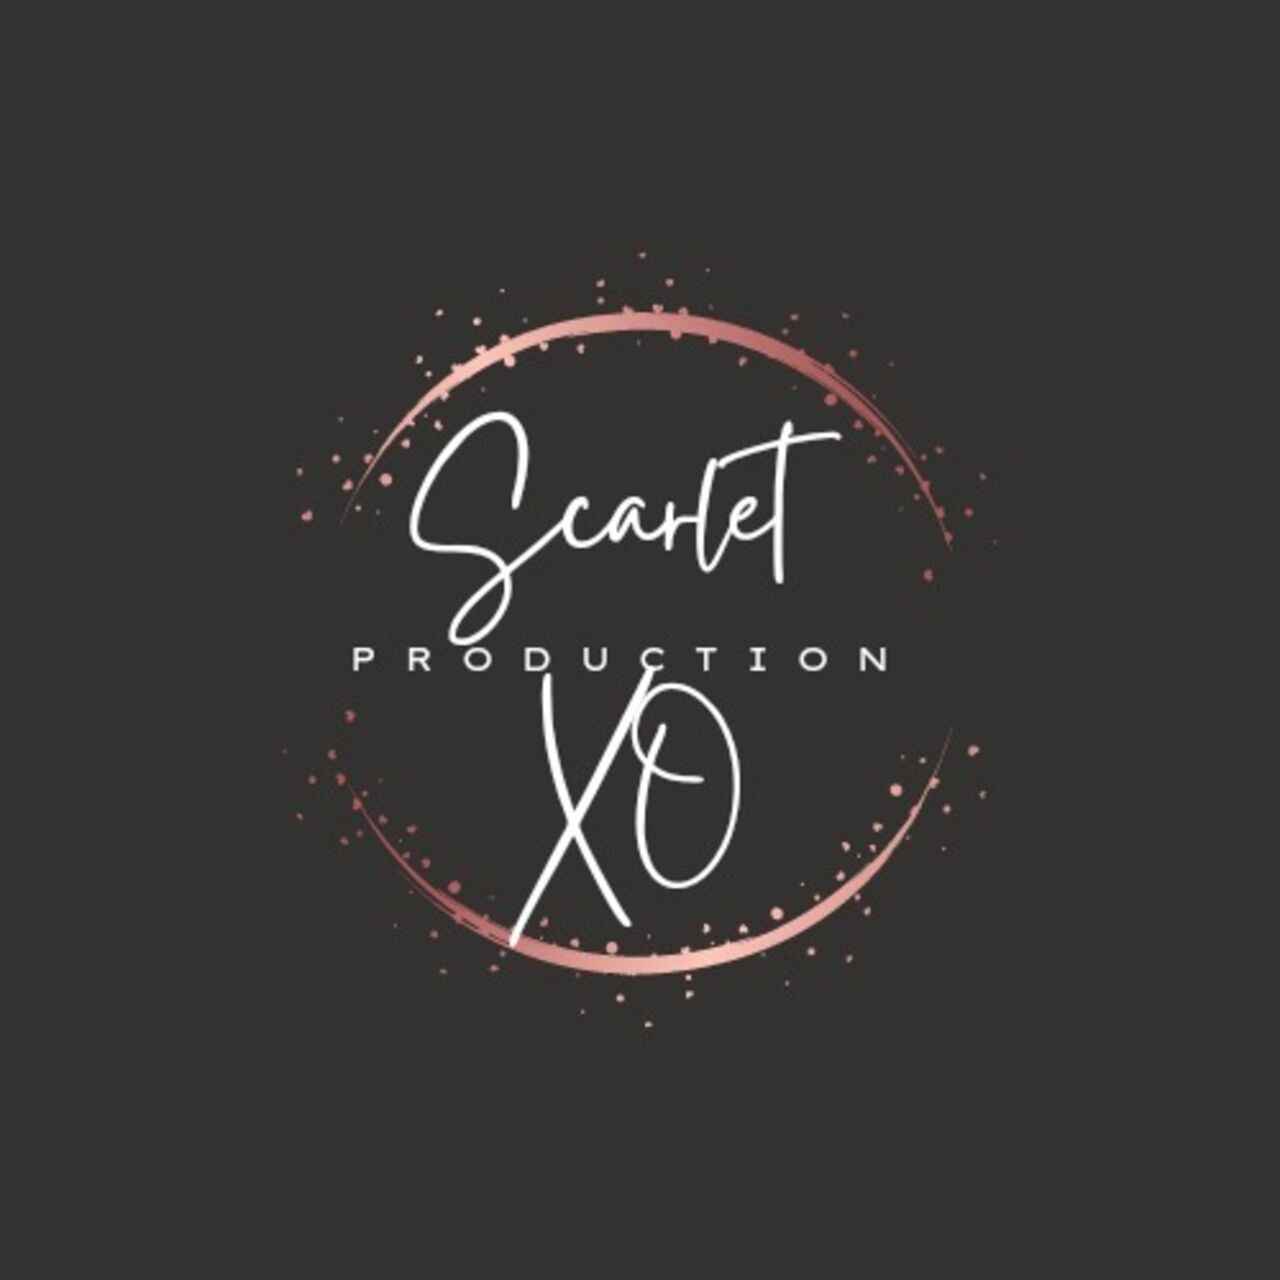 See Scarlet XO profile